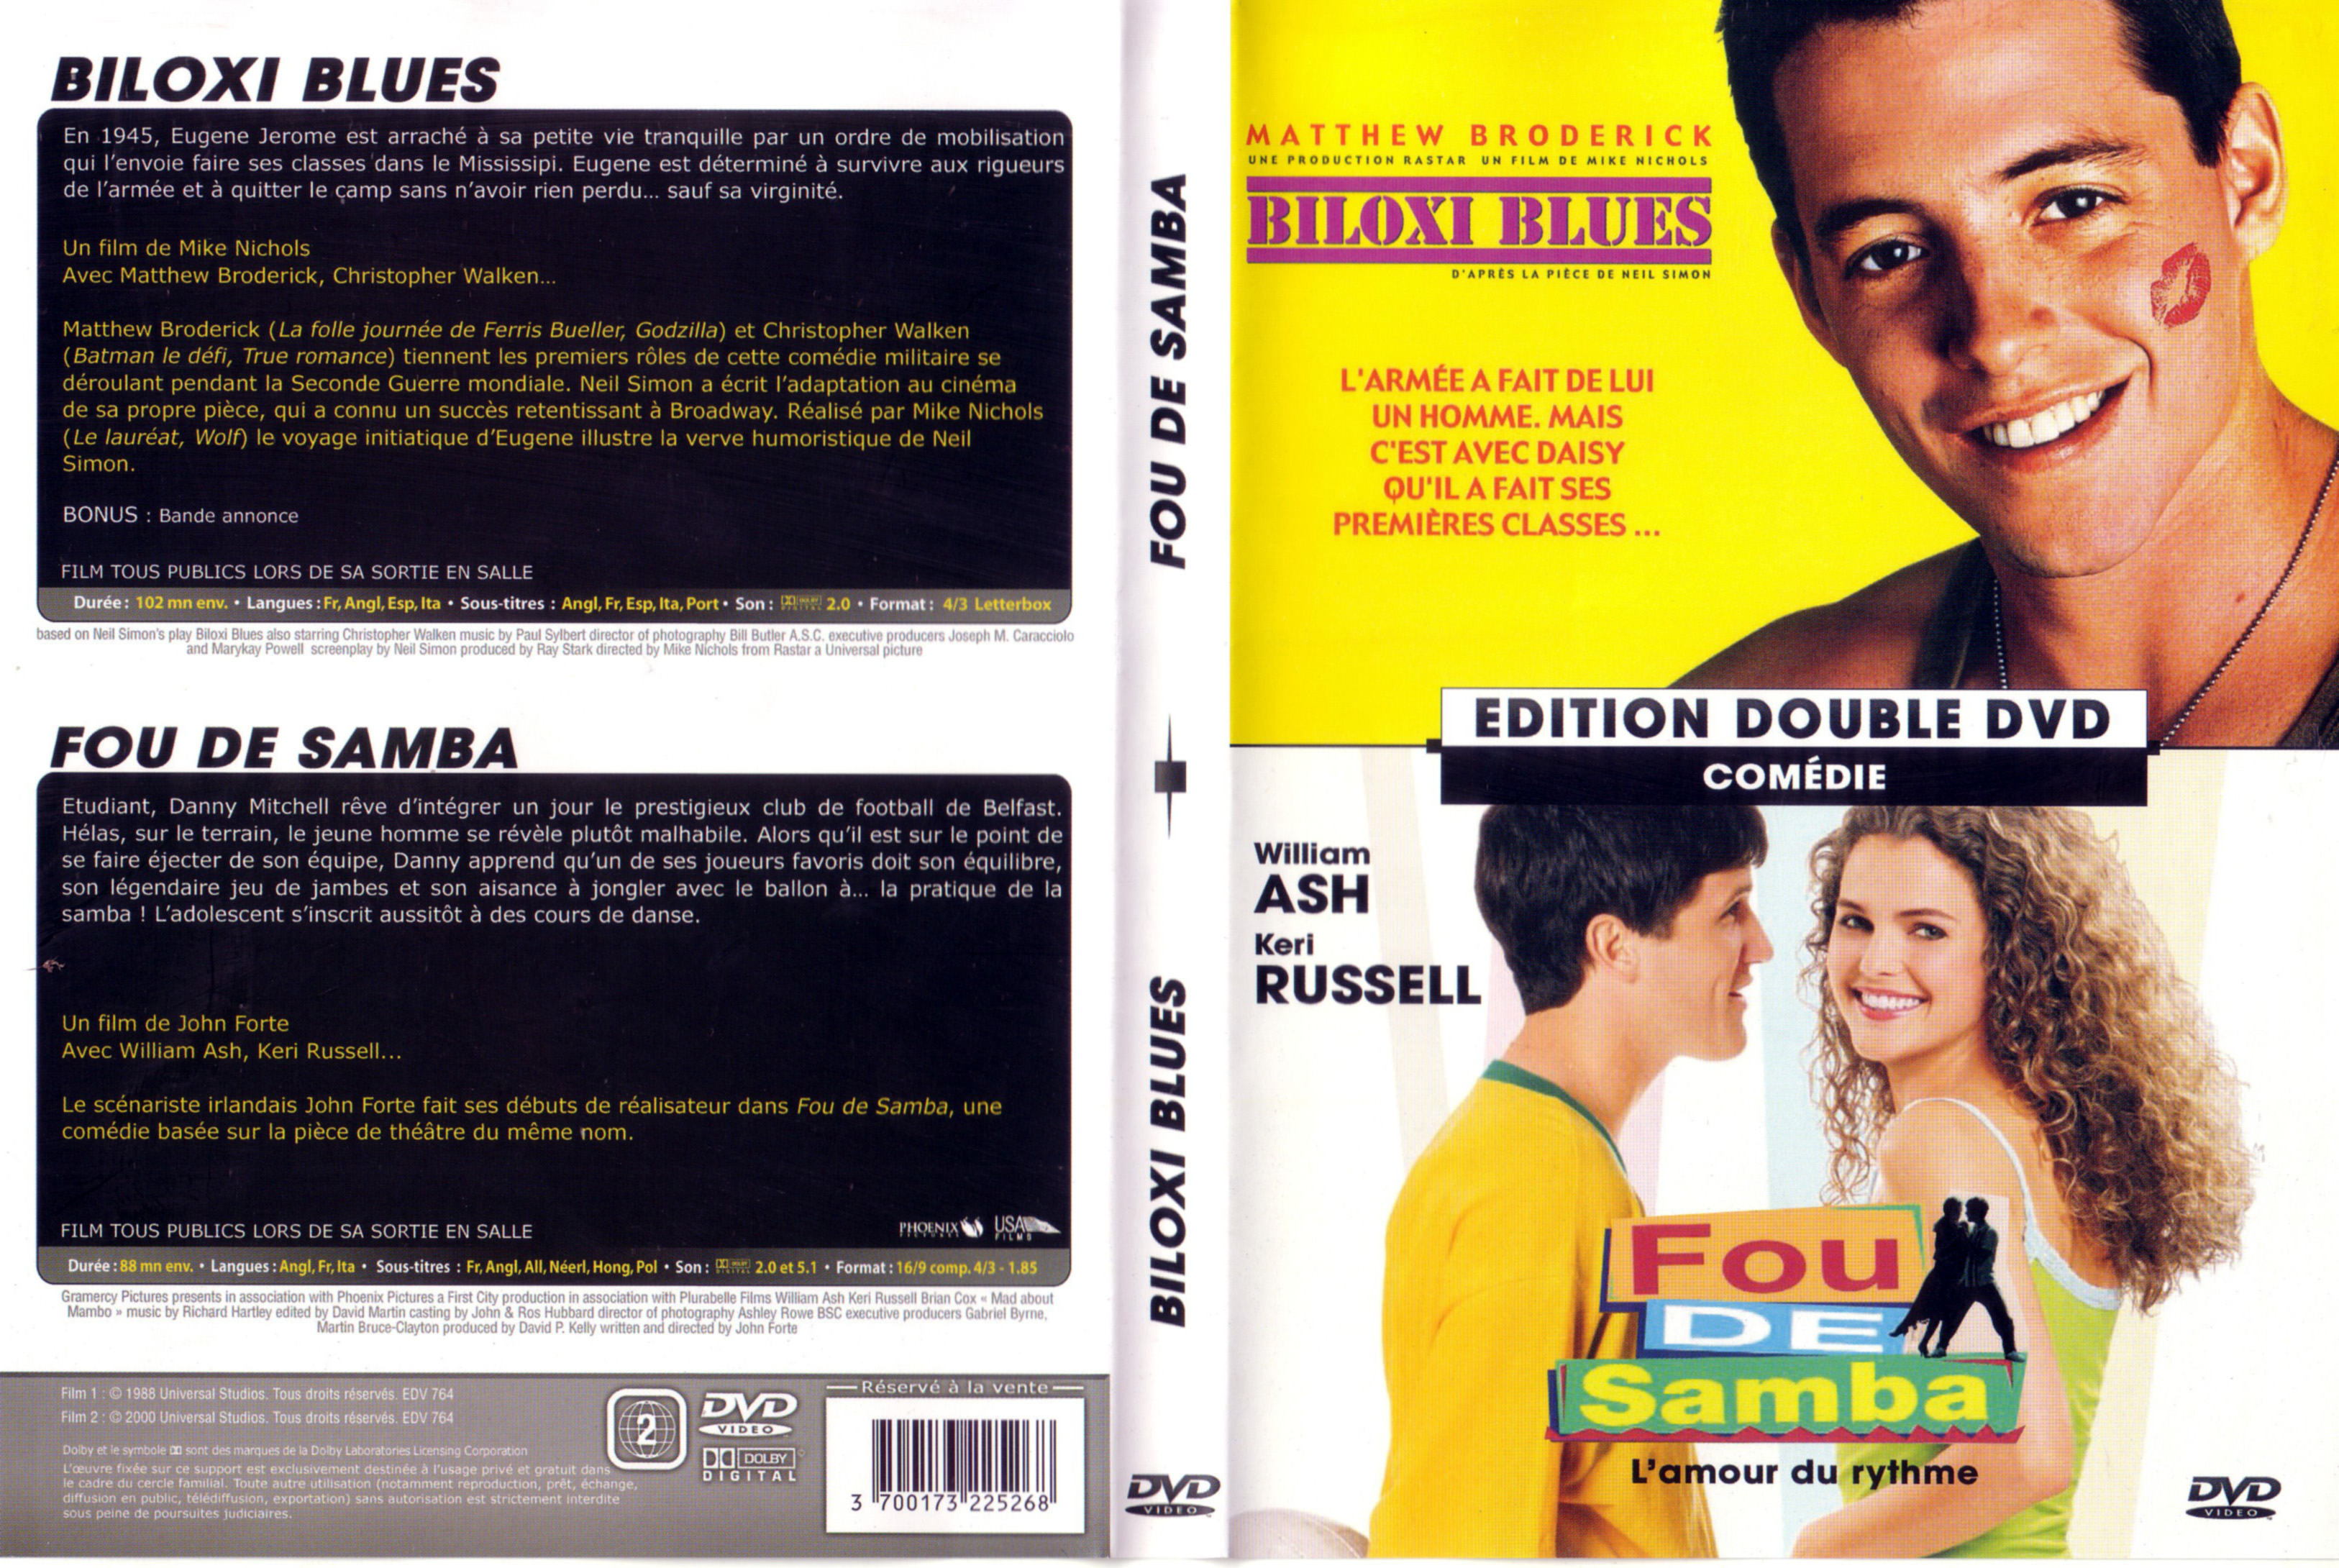 Jaquette DVD Biloxi blues + Fou de Samba